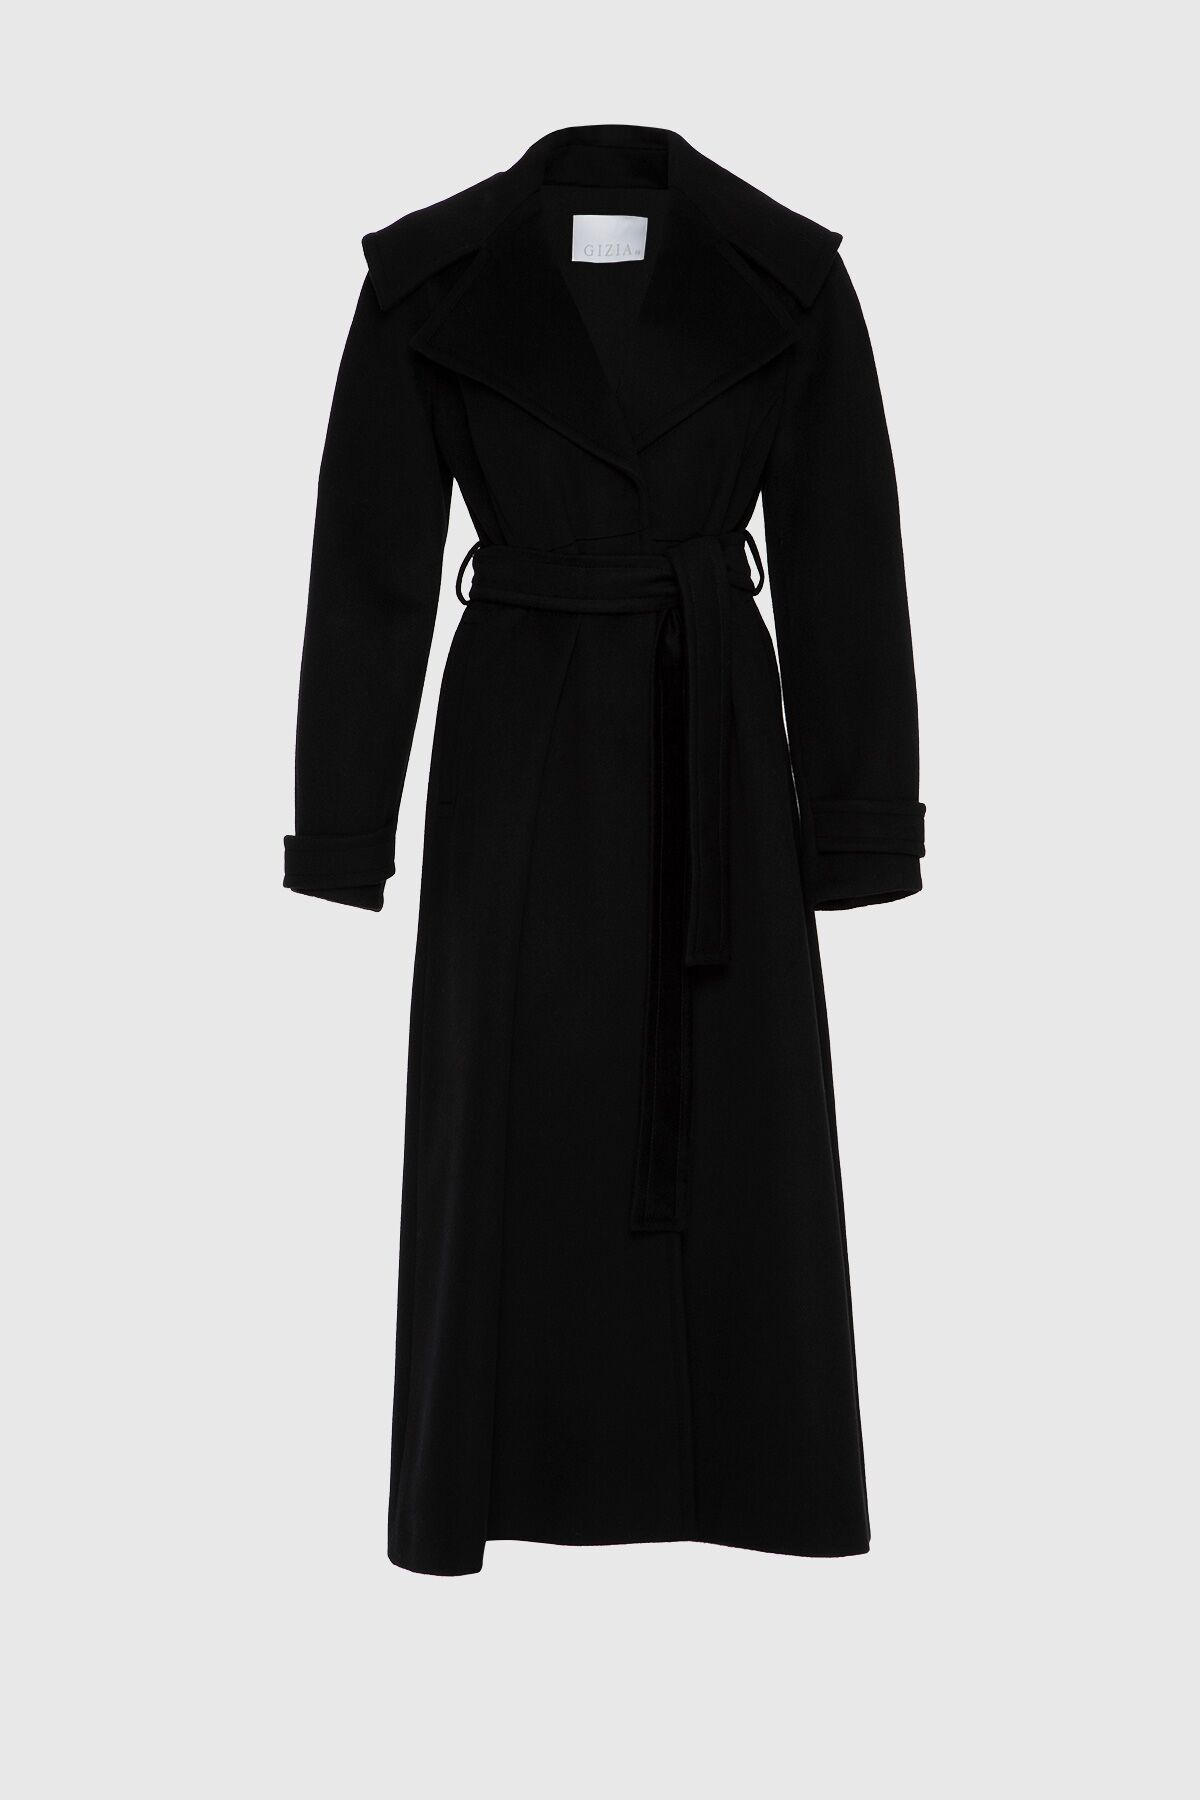  GIZIA - Black Cashmere Coat